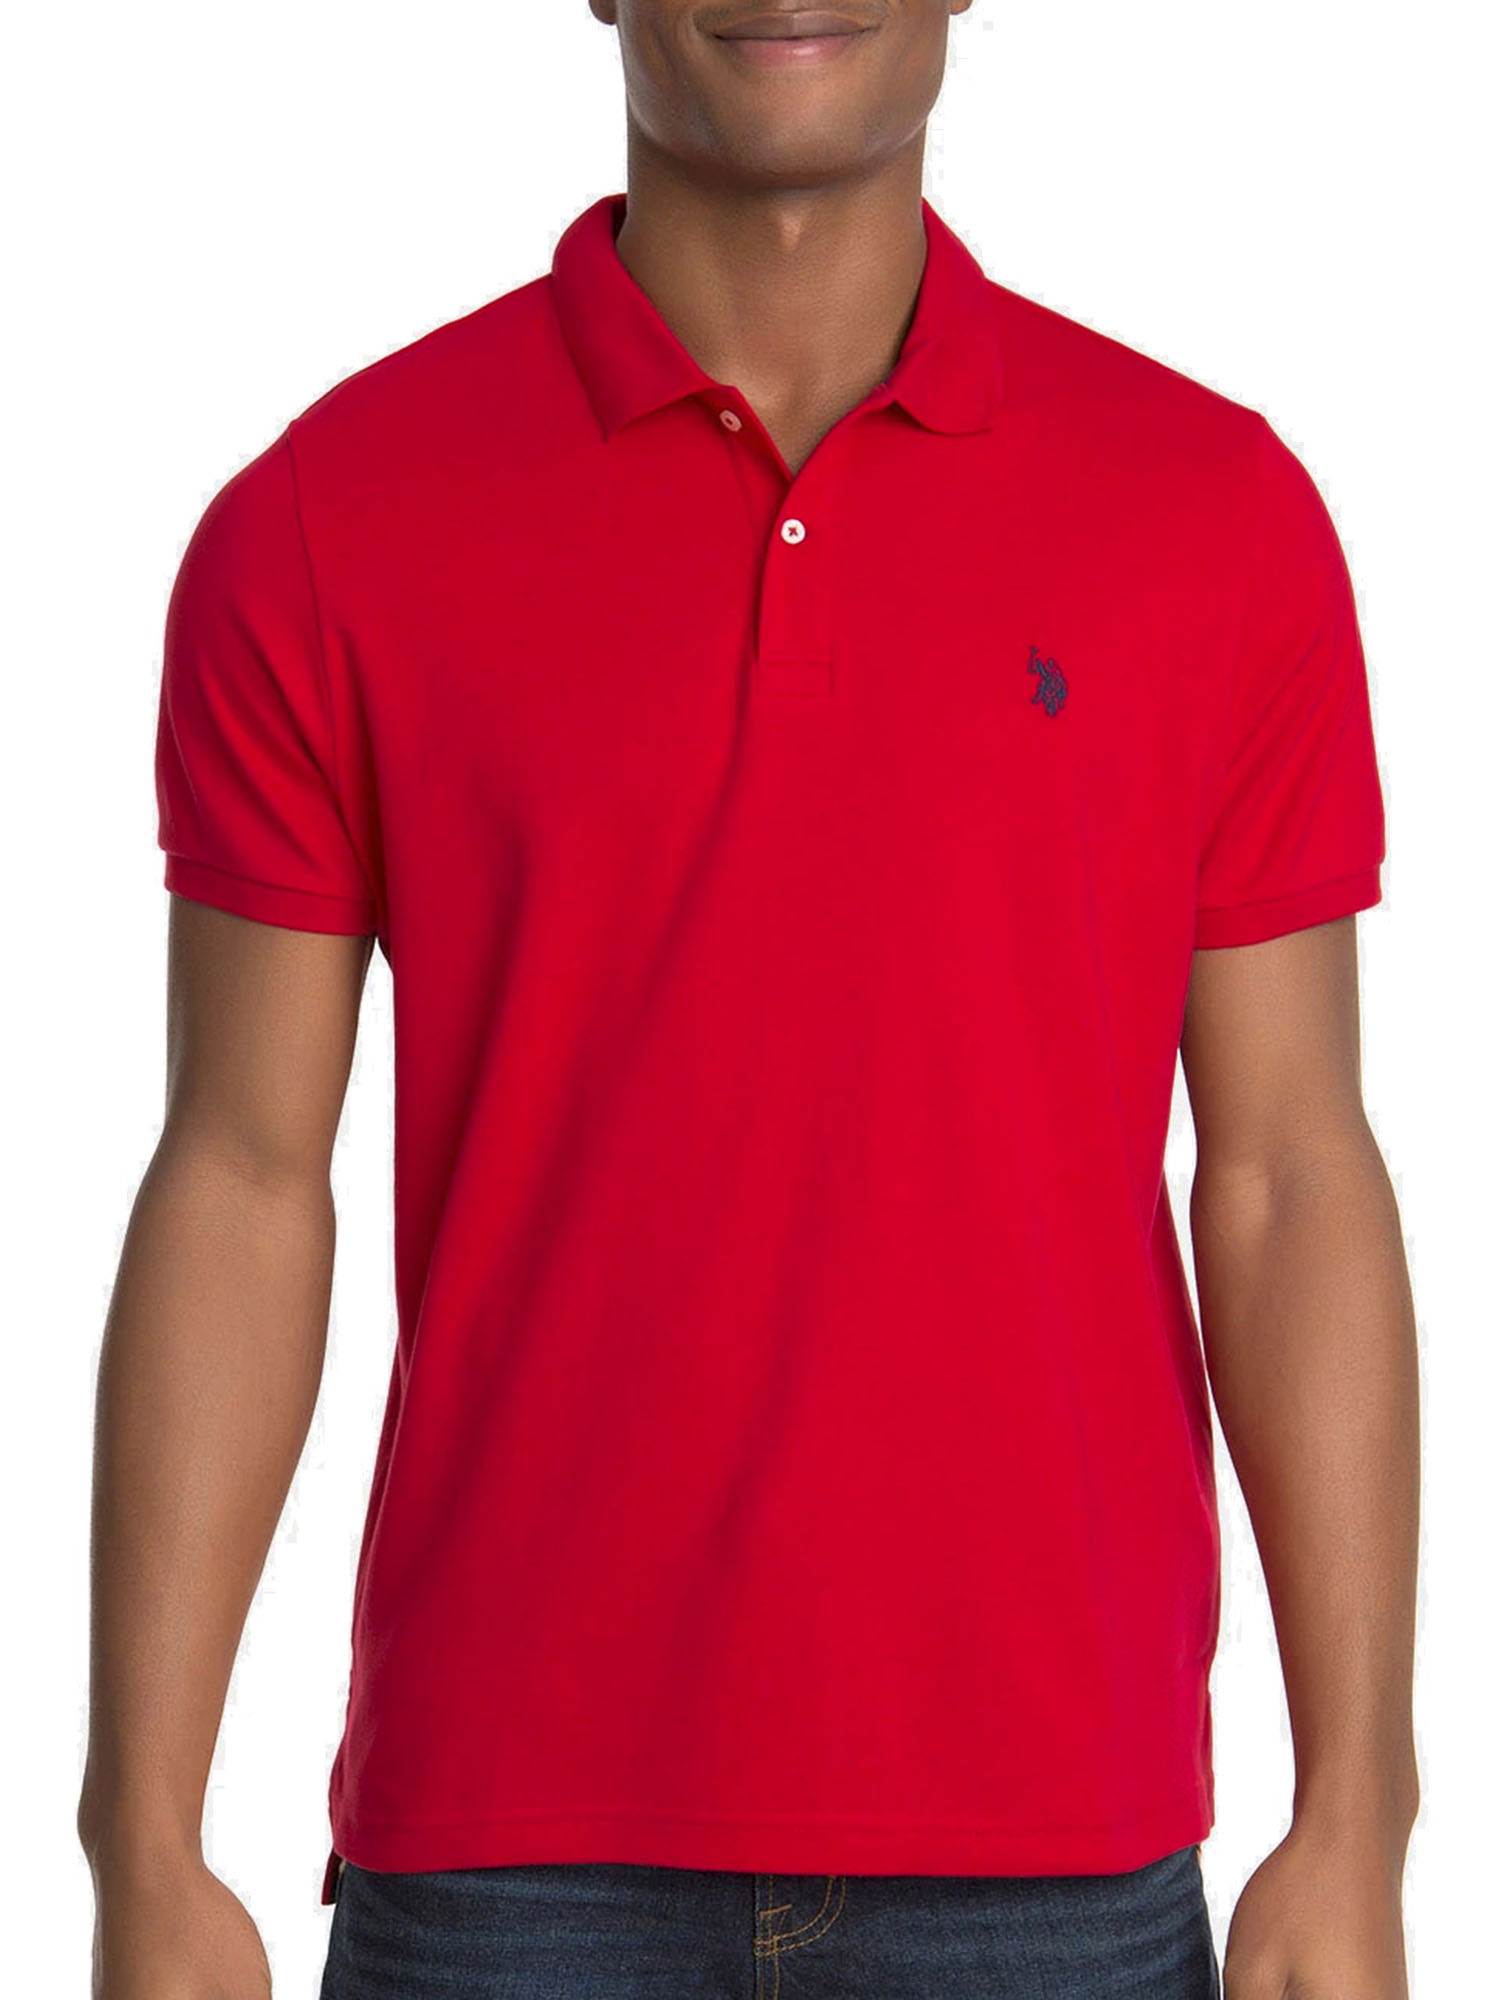 U.s. Polo Assn. Mens Interlock Polo T-Shirt - image 1 of 7